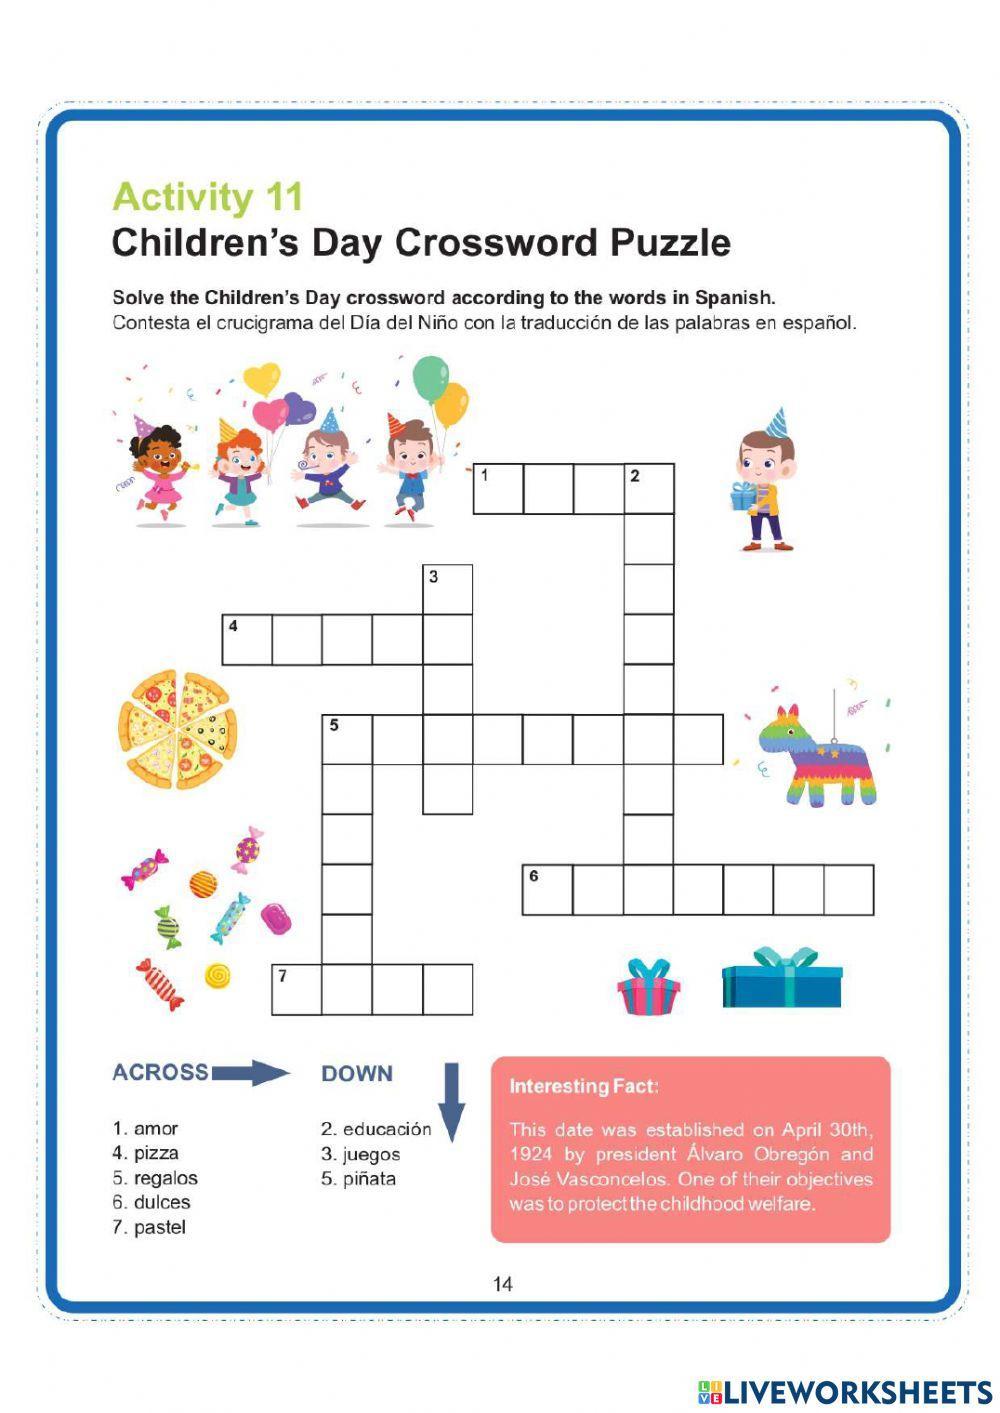 Children’s Day Crossword Puzzle